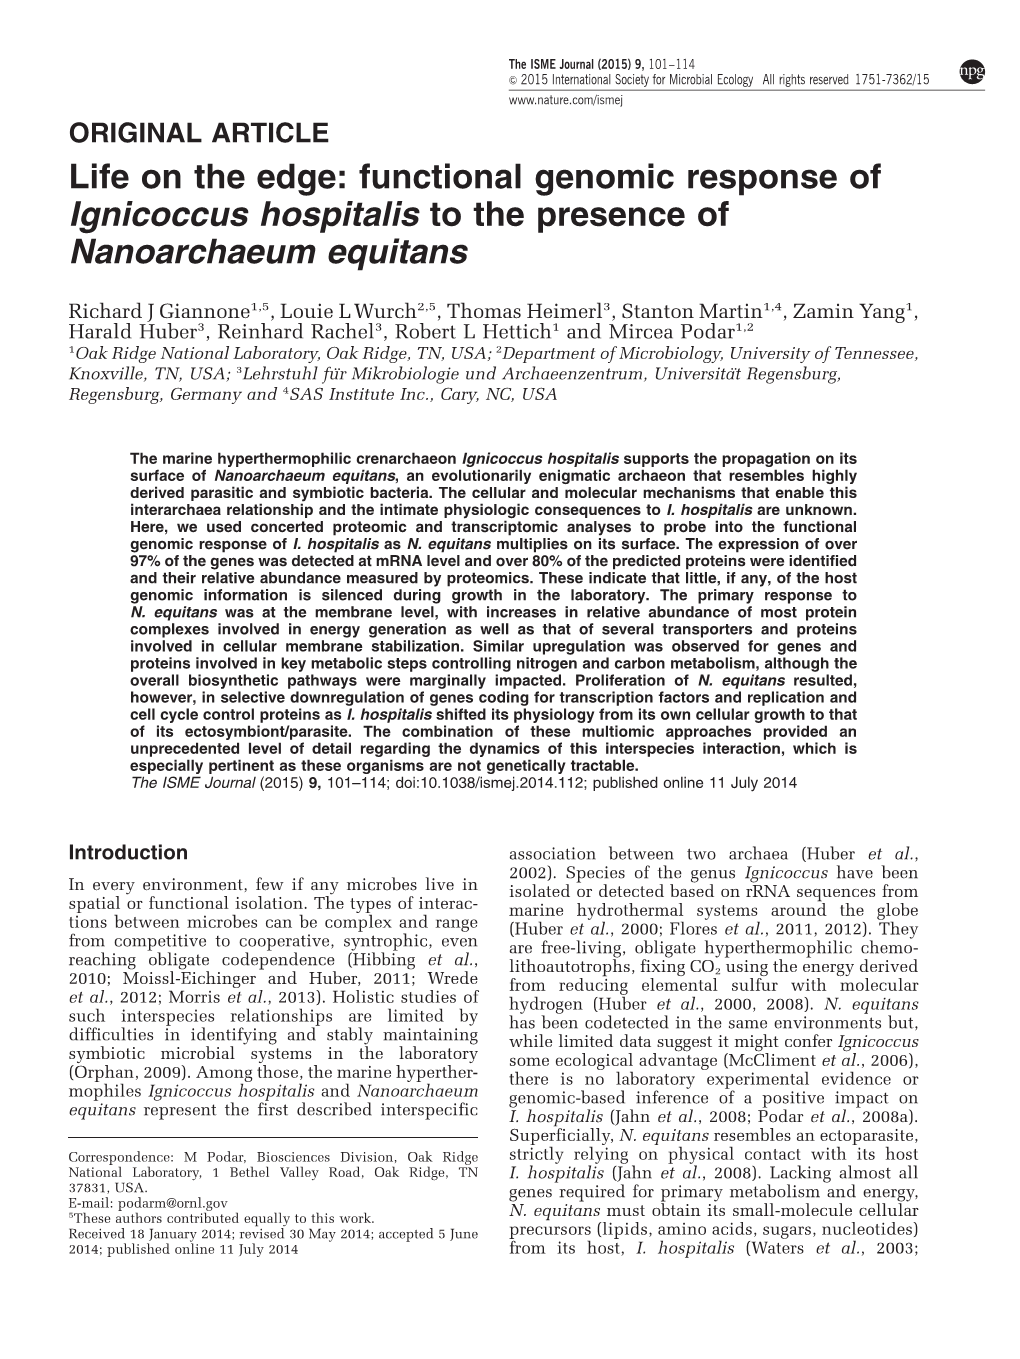 Functional Genomic Response of Ignicoccus Hospitalis to the Presence of Nanoarchaeum Equitans